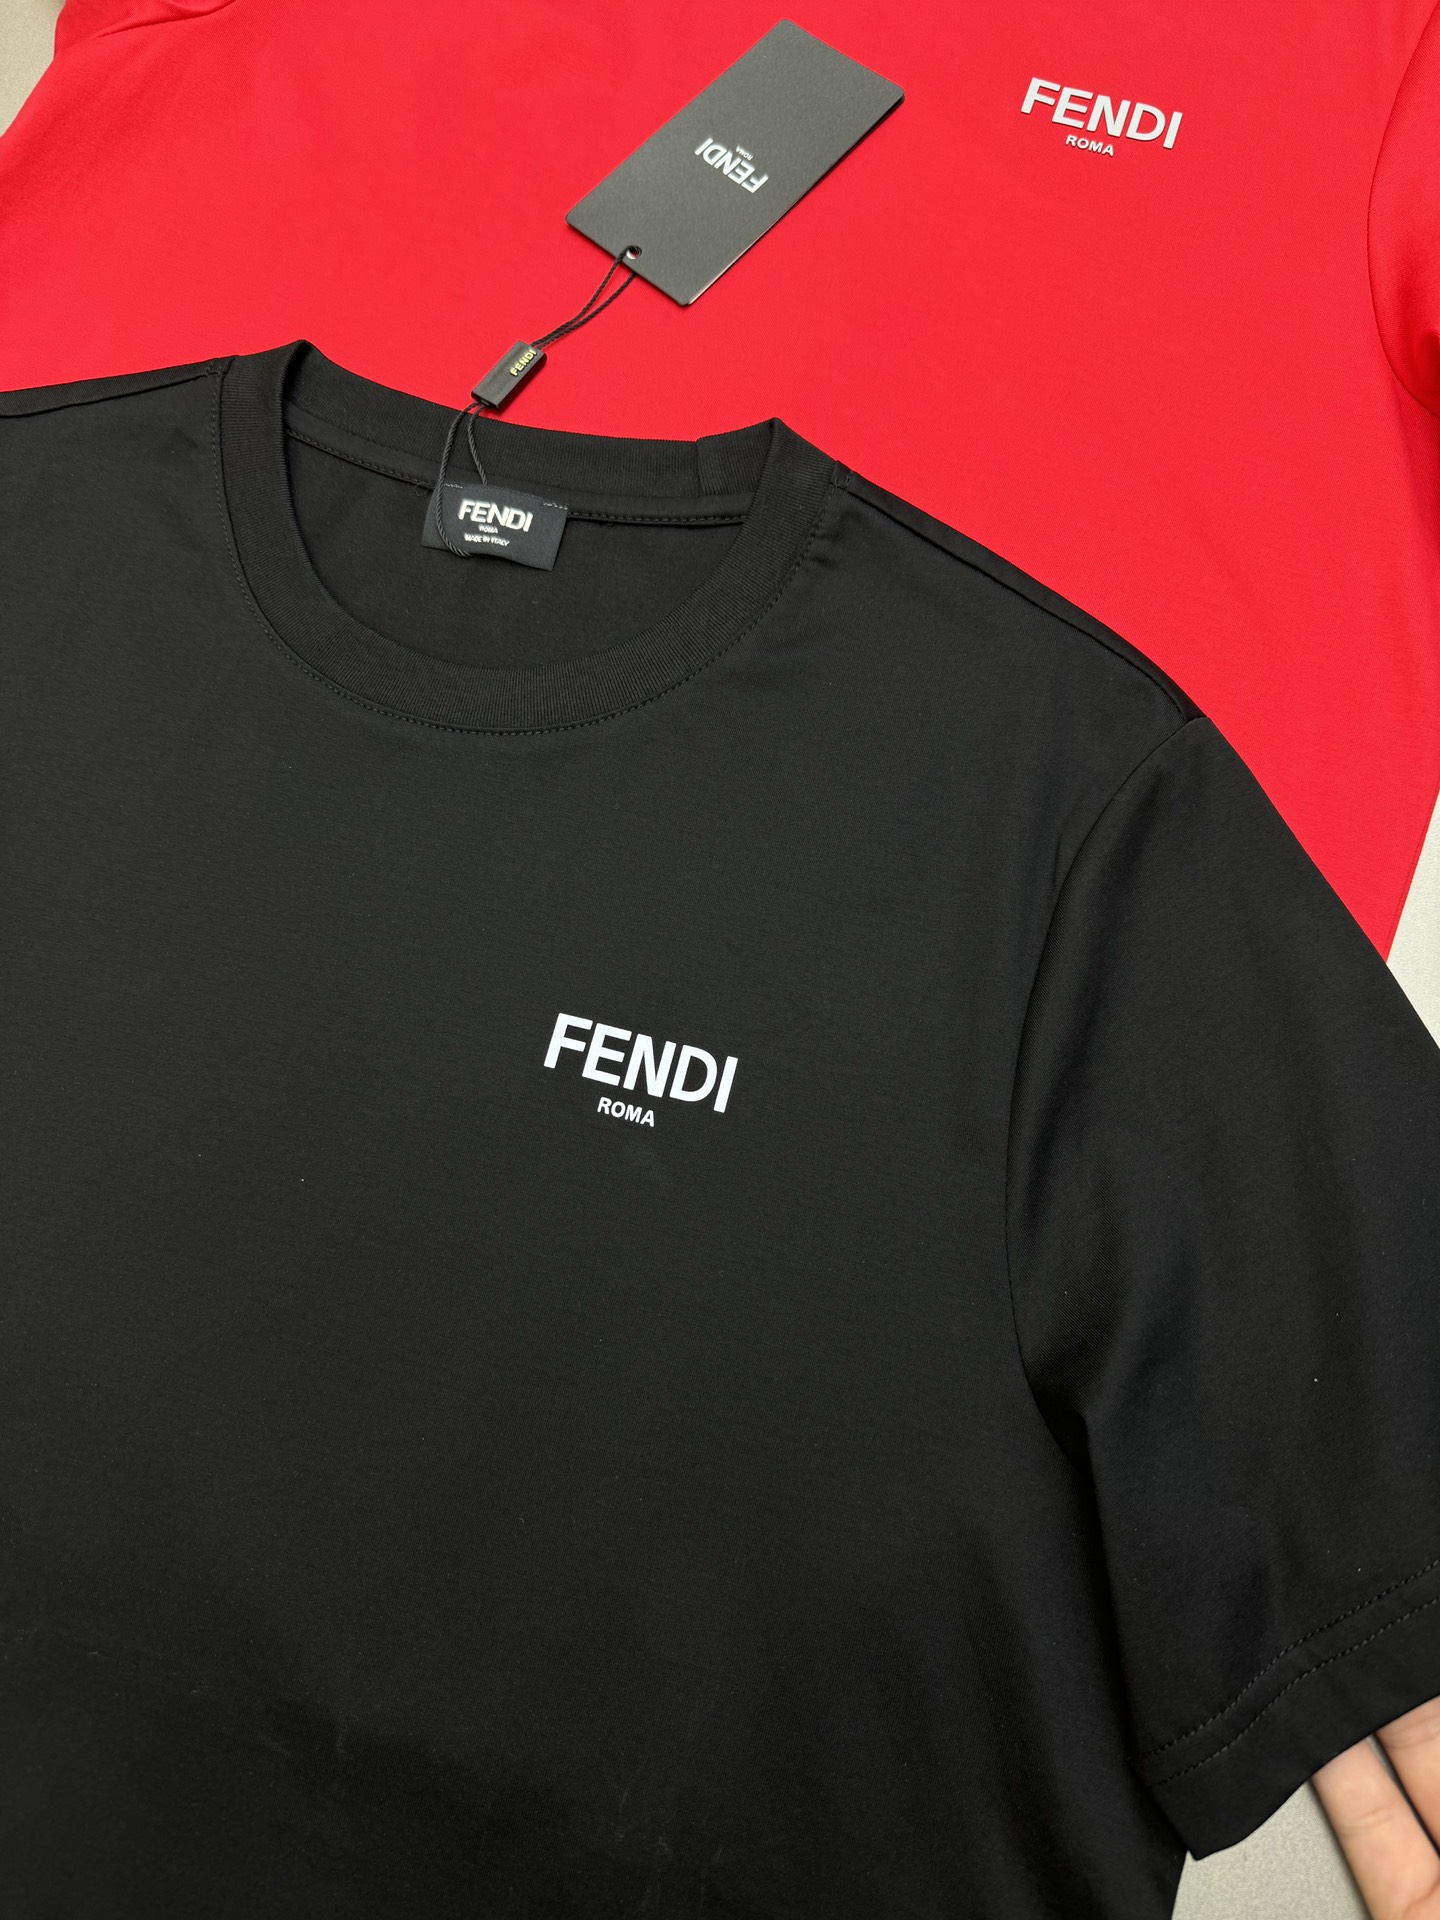 ️FEND*芬-迪2024春夏新款T恤对于FD的经典单品演绎每季款式都是好看耐穿.基础款立体烫画字母工艺